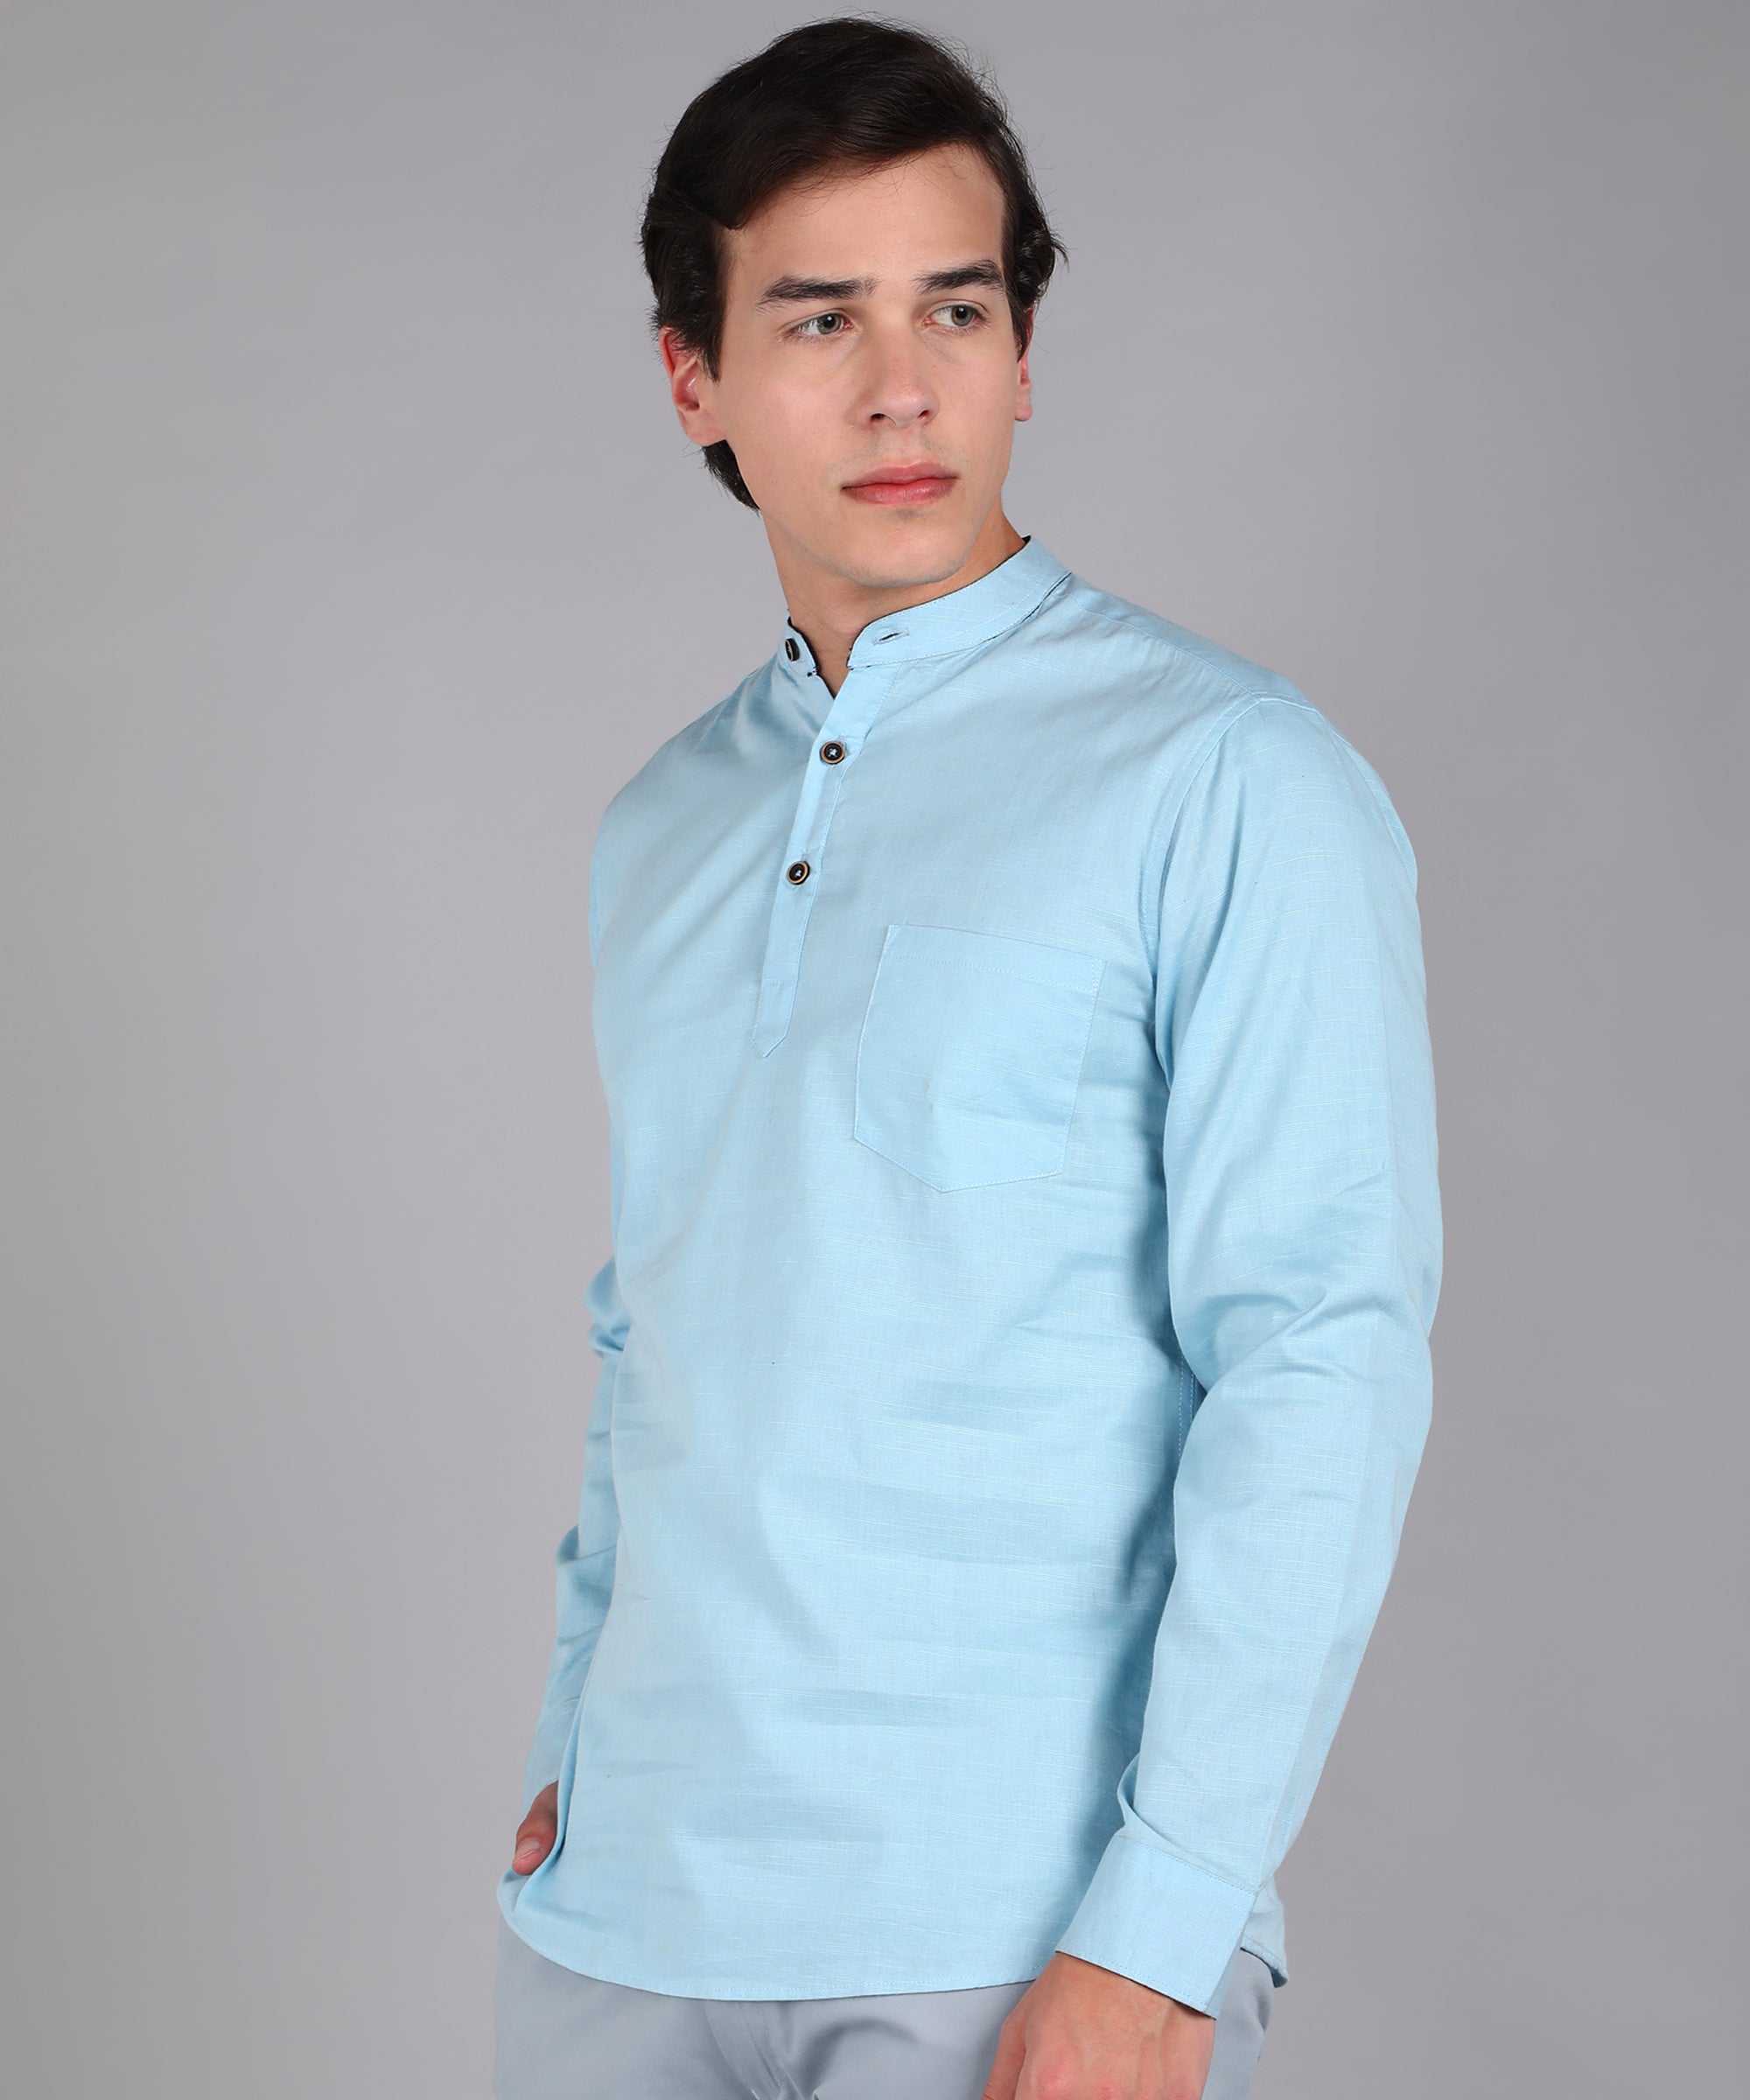 Men's Sky Blue Cotton Full Sleeve Slim Fit Solid Shirt with Mandarin Collar